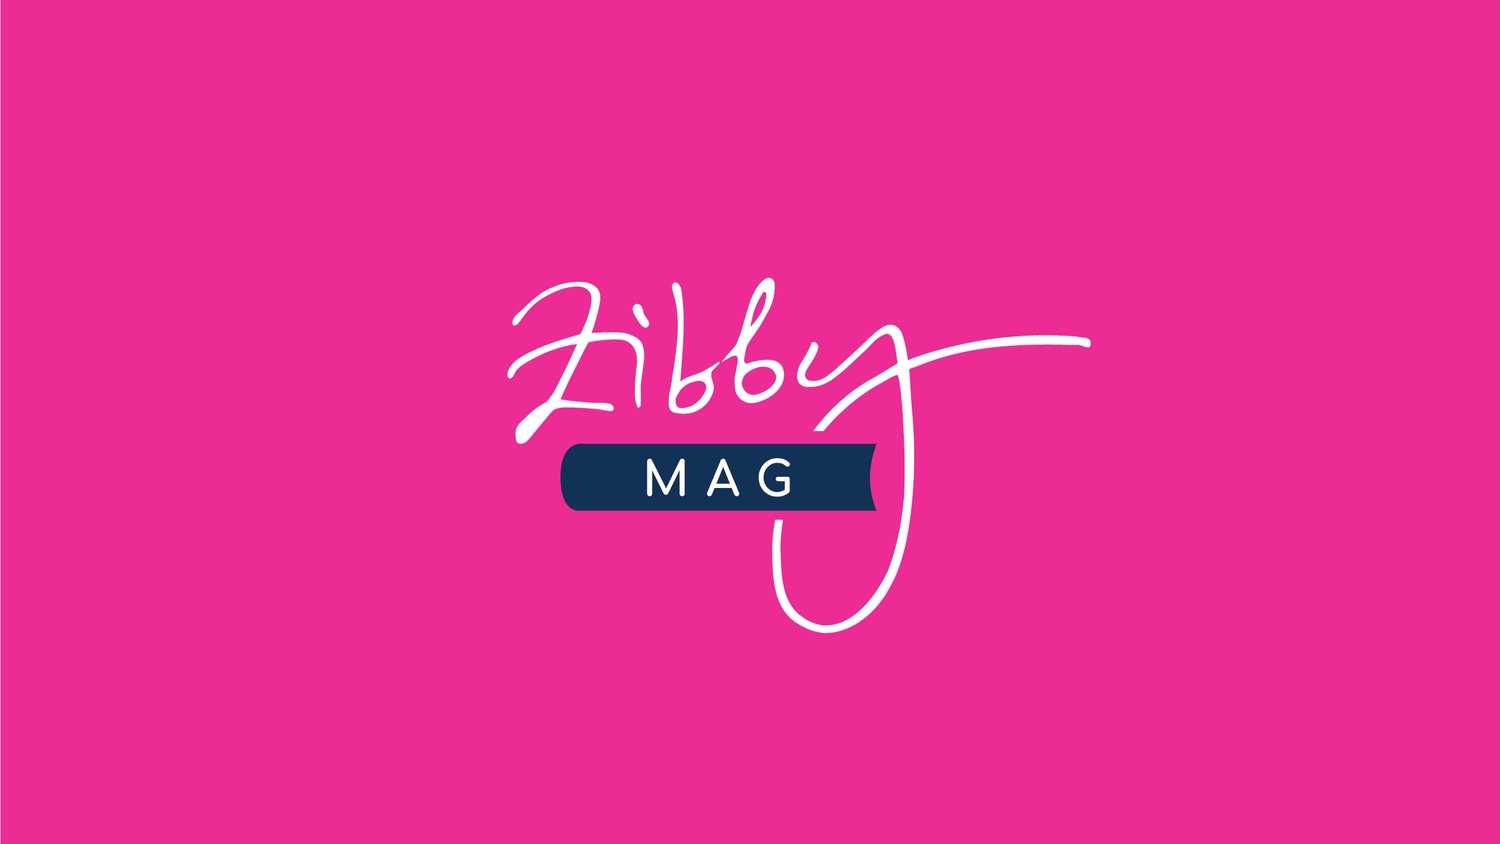 Zibby Mag